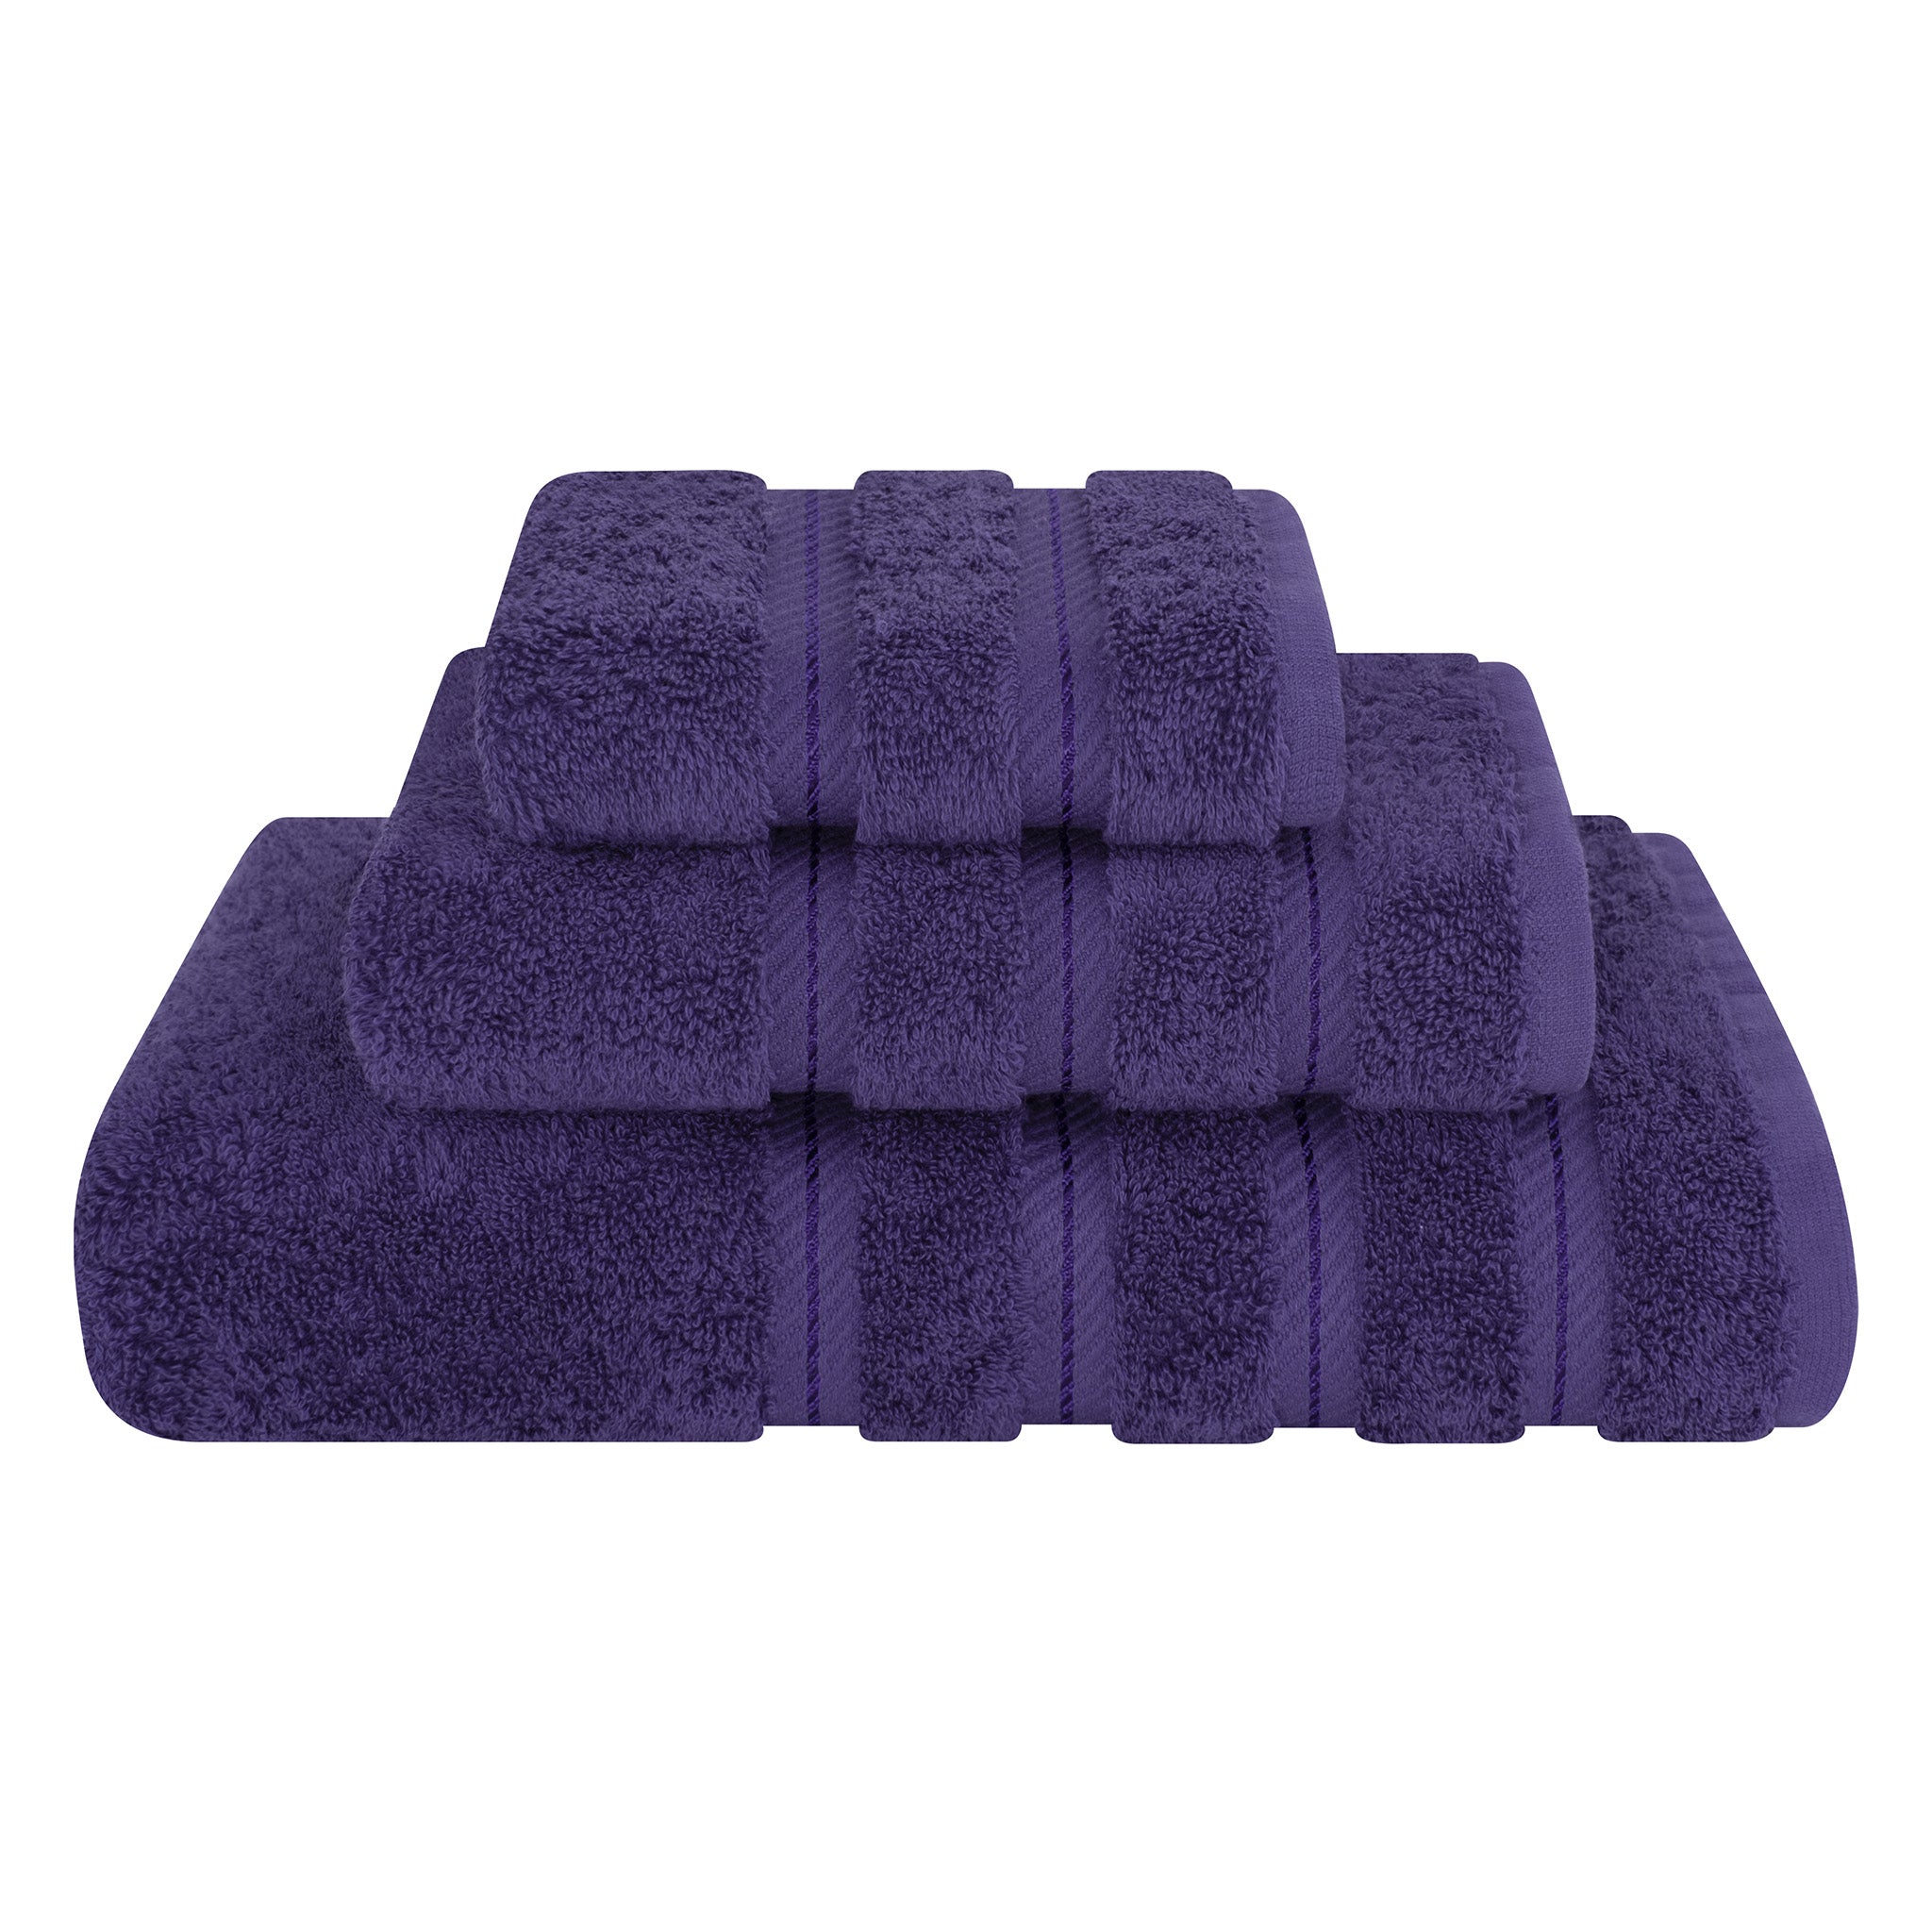 American Soft Linen 3 Piece Luxury Hotel Towel Set 20 set case pack purple-1